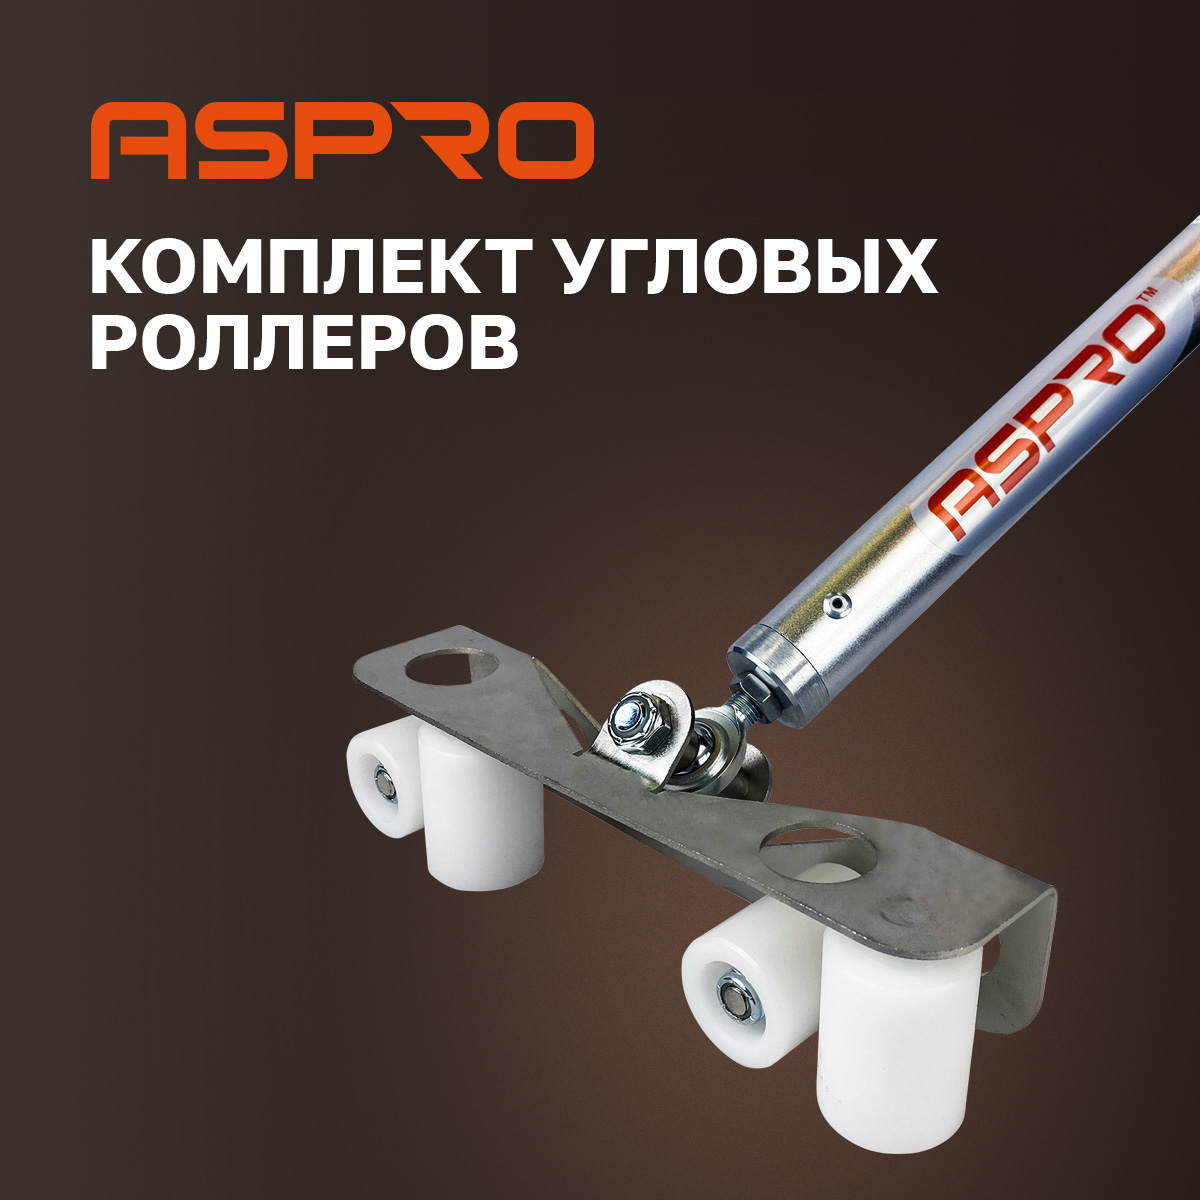 Комплект угловых роллеров Aspro, 102280 комплект угловых вентилей sr rubinetterie